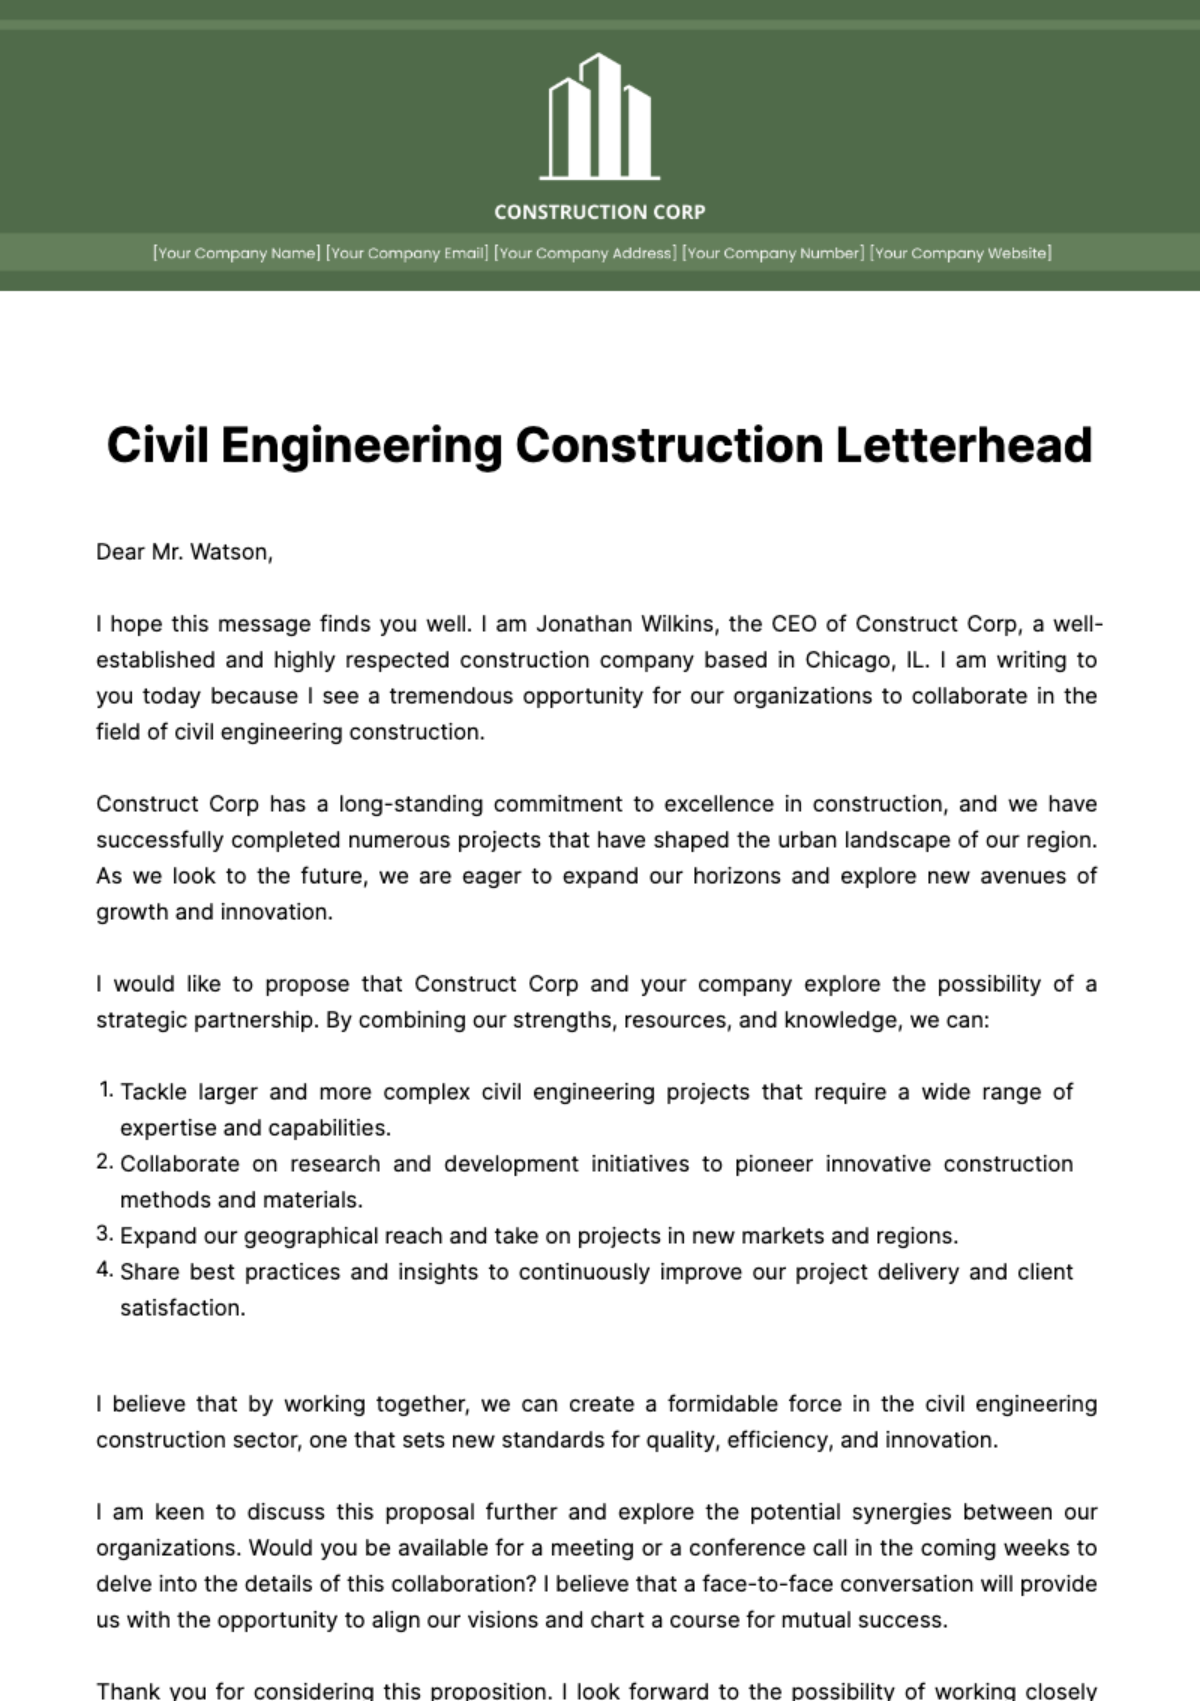 Civil Engineering Construction Letterhead Template